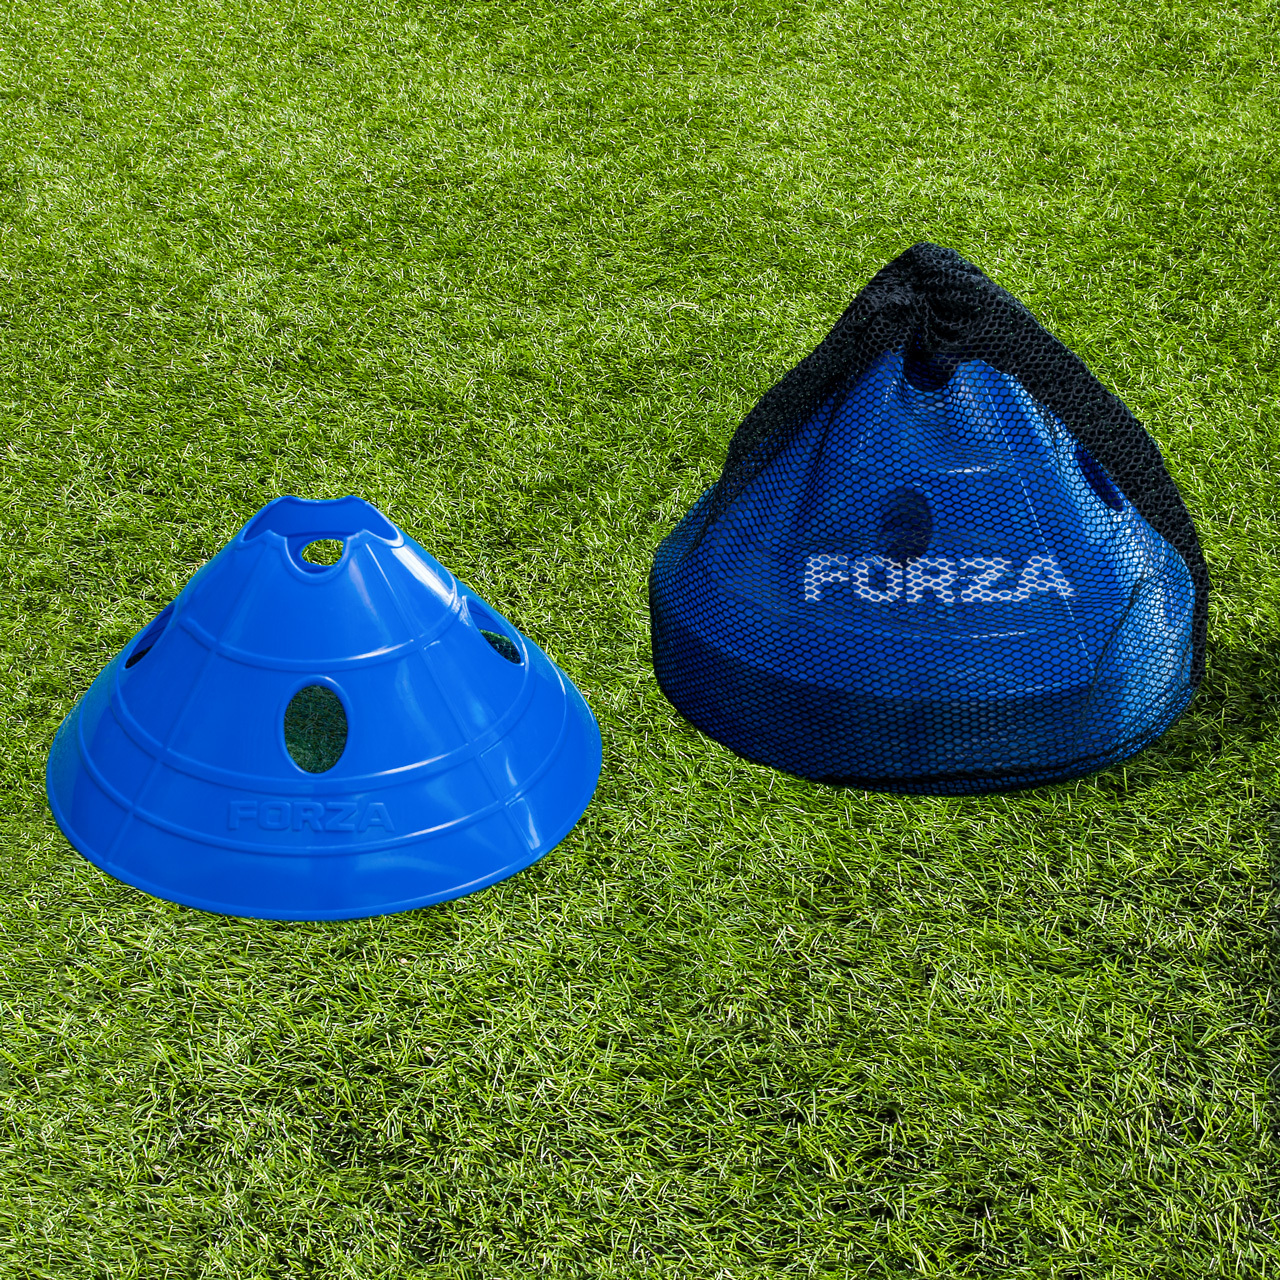 FORZA Training Soccer Ball, Best Training Balls